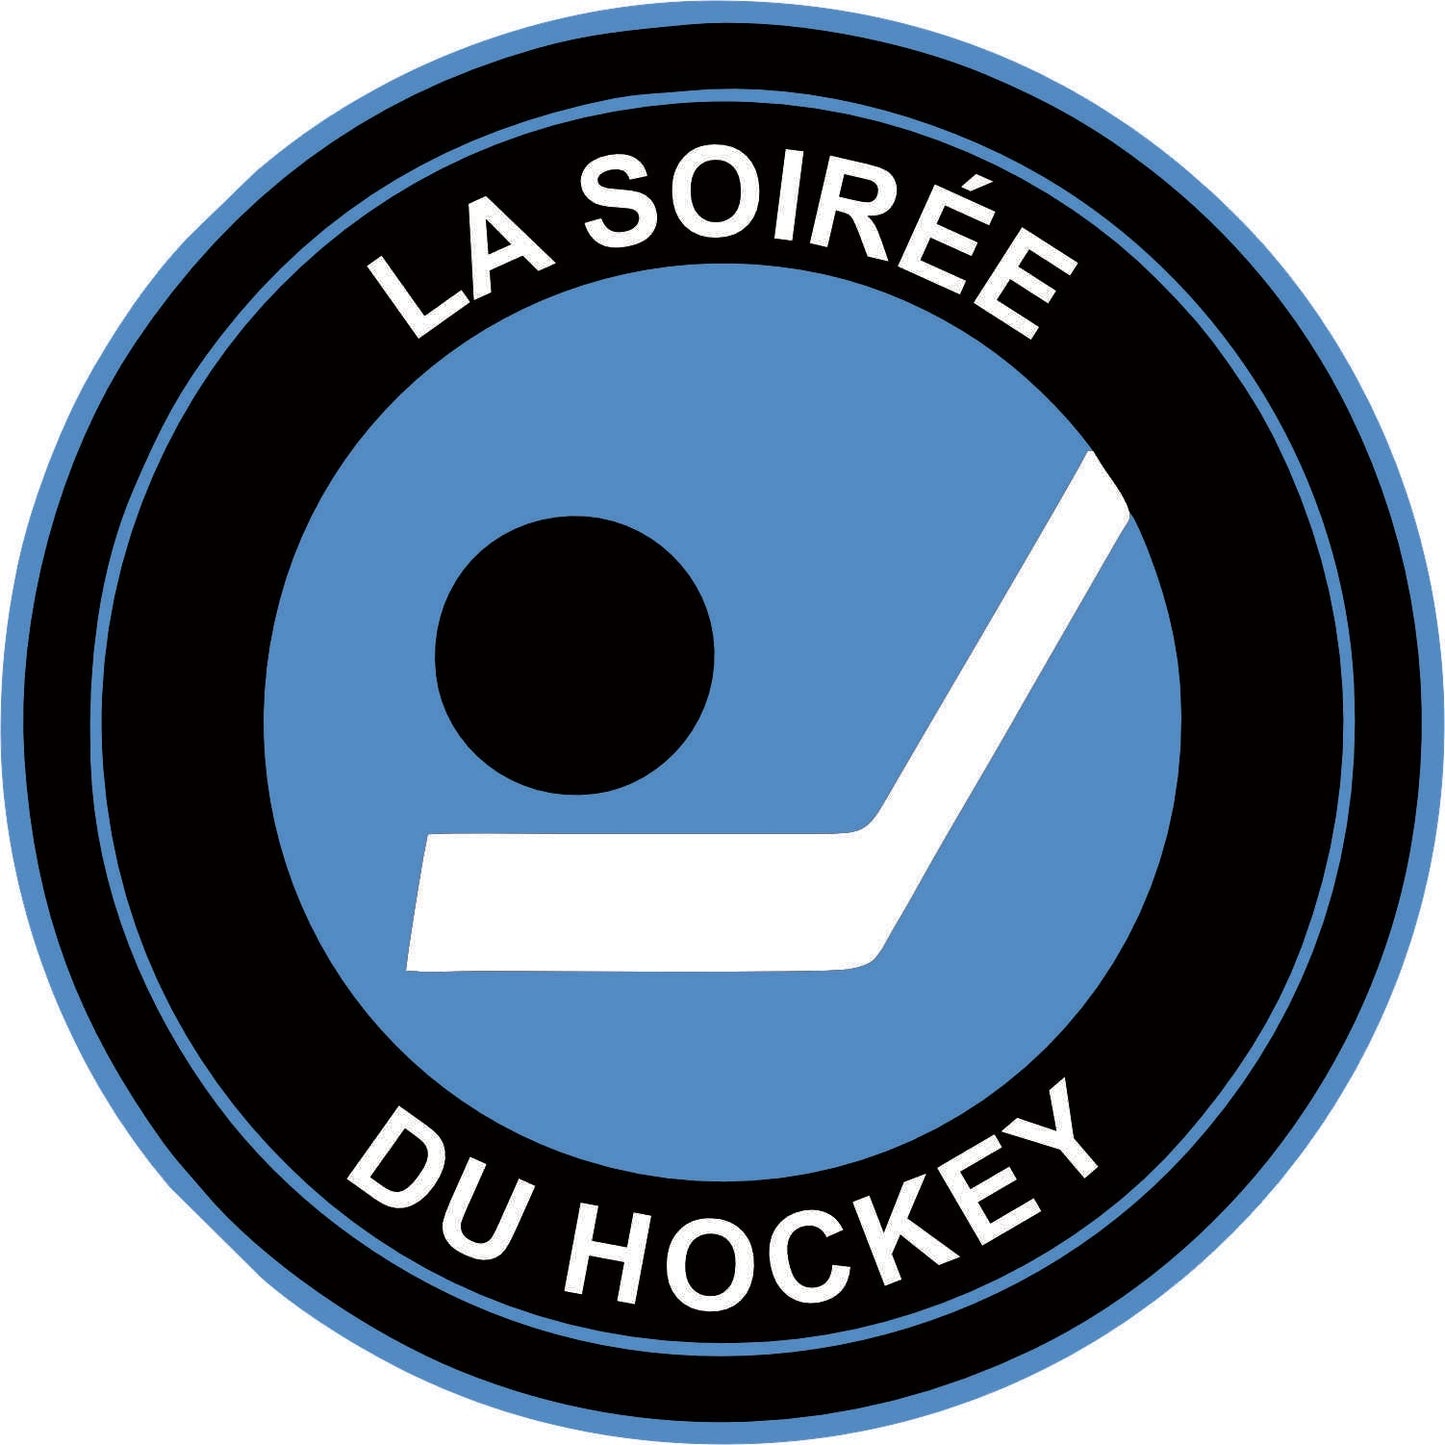 016-Single-sided illuminated sign - La soirée du Hockey